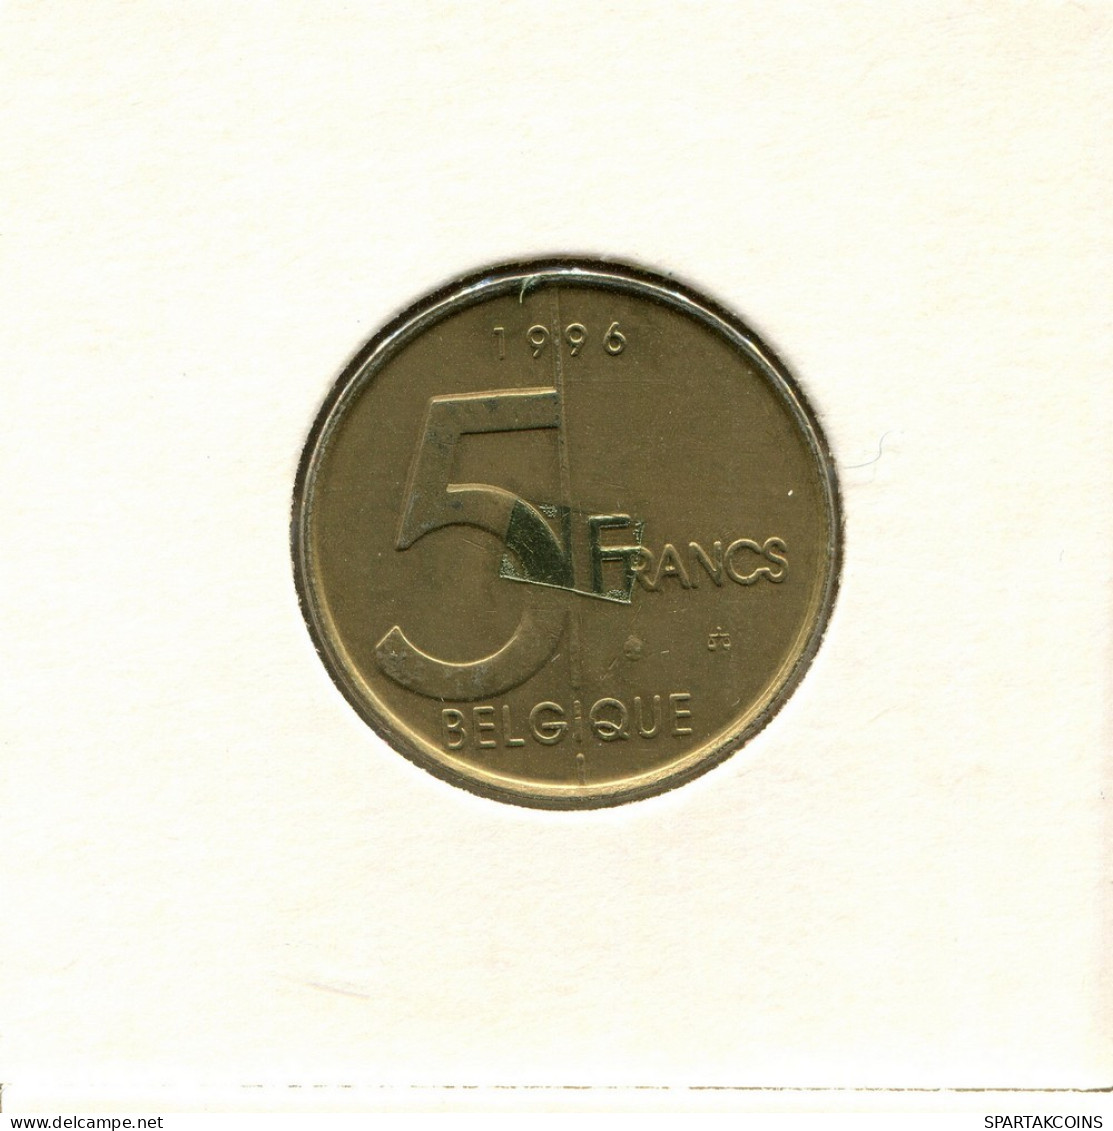 5 FRANCS 1996 FRENCH Text BELGIUM Coin #BB352.U - 5 Francs